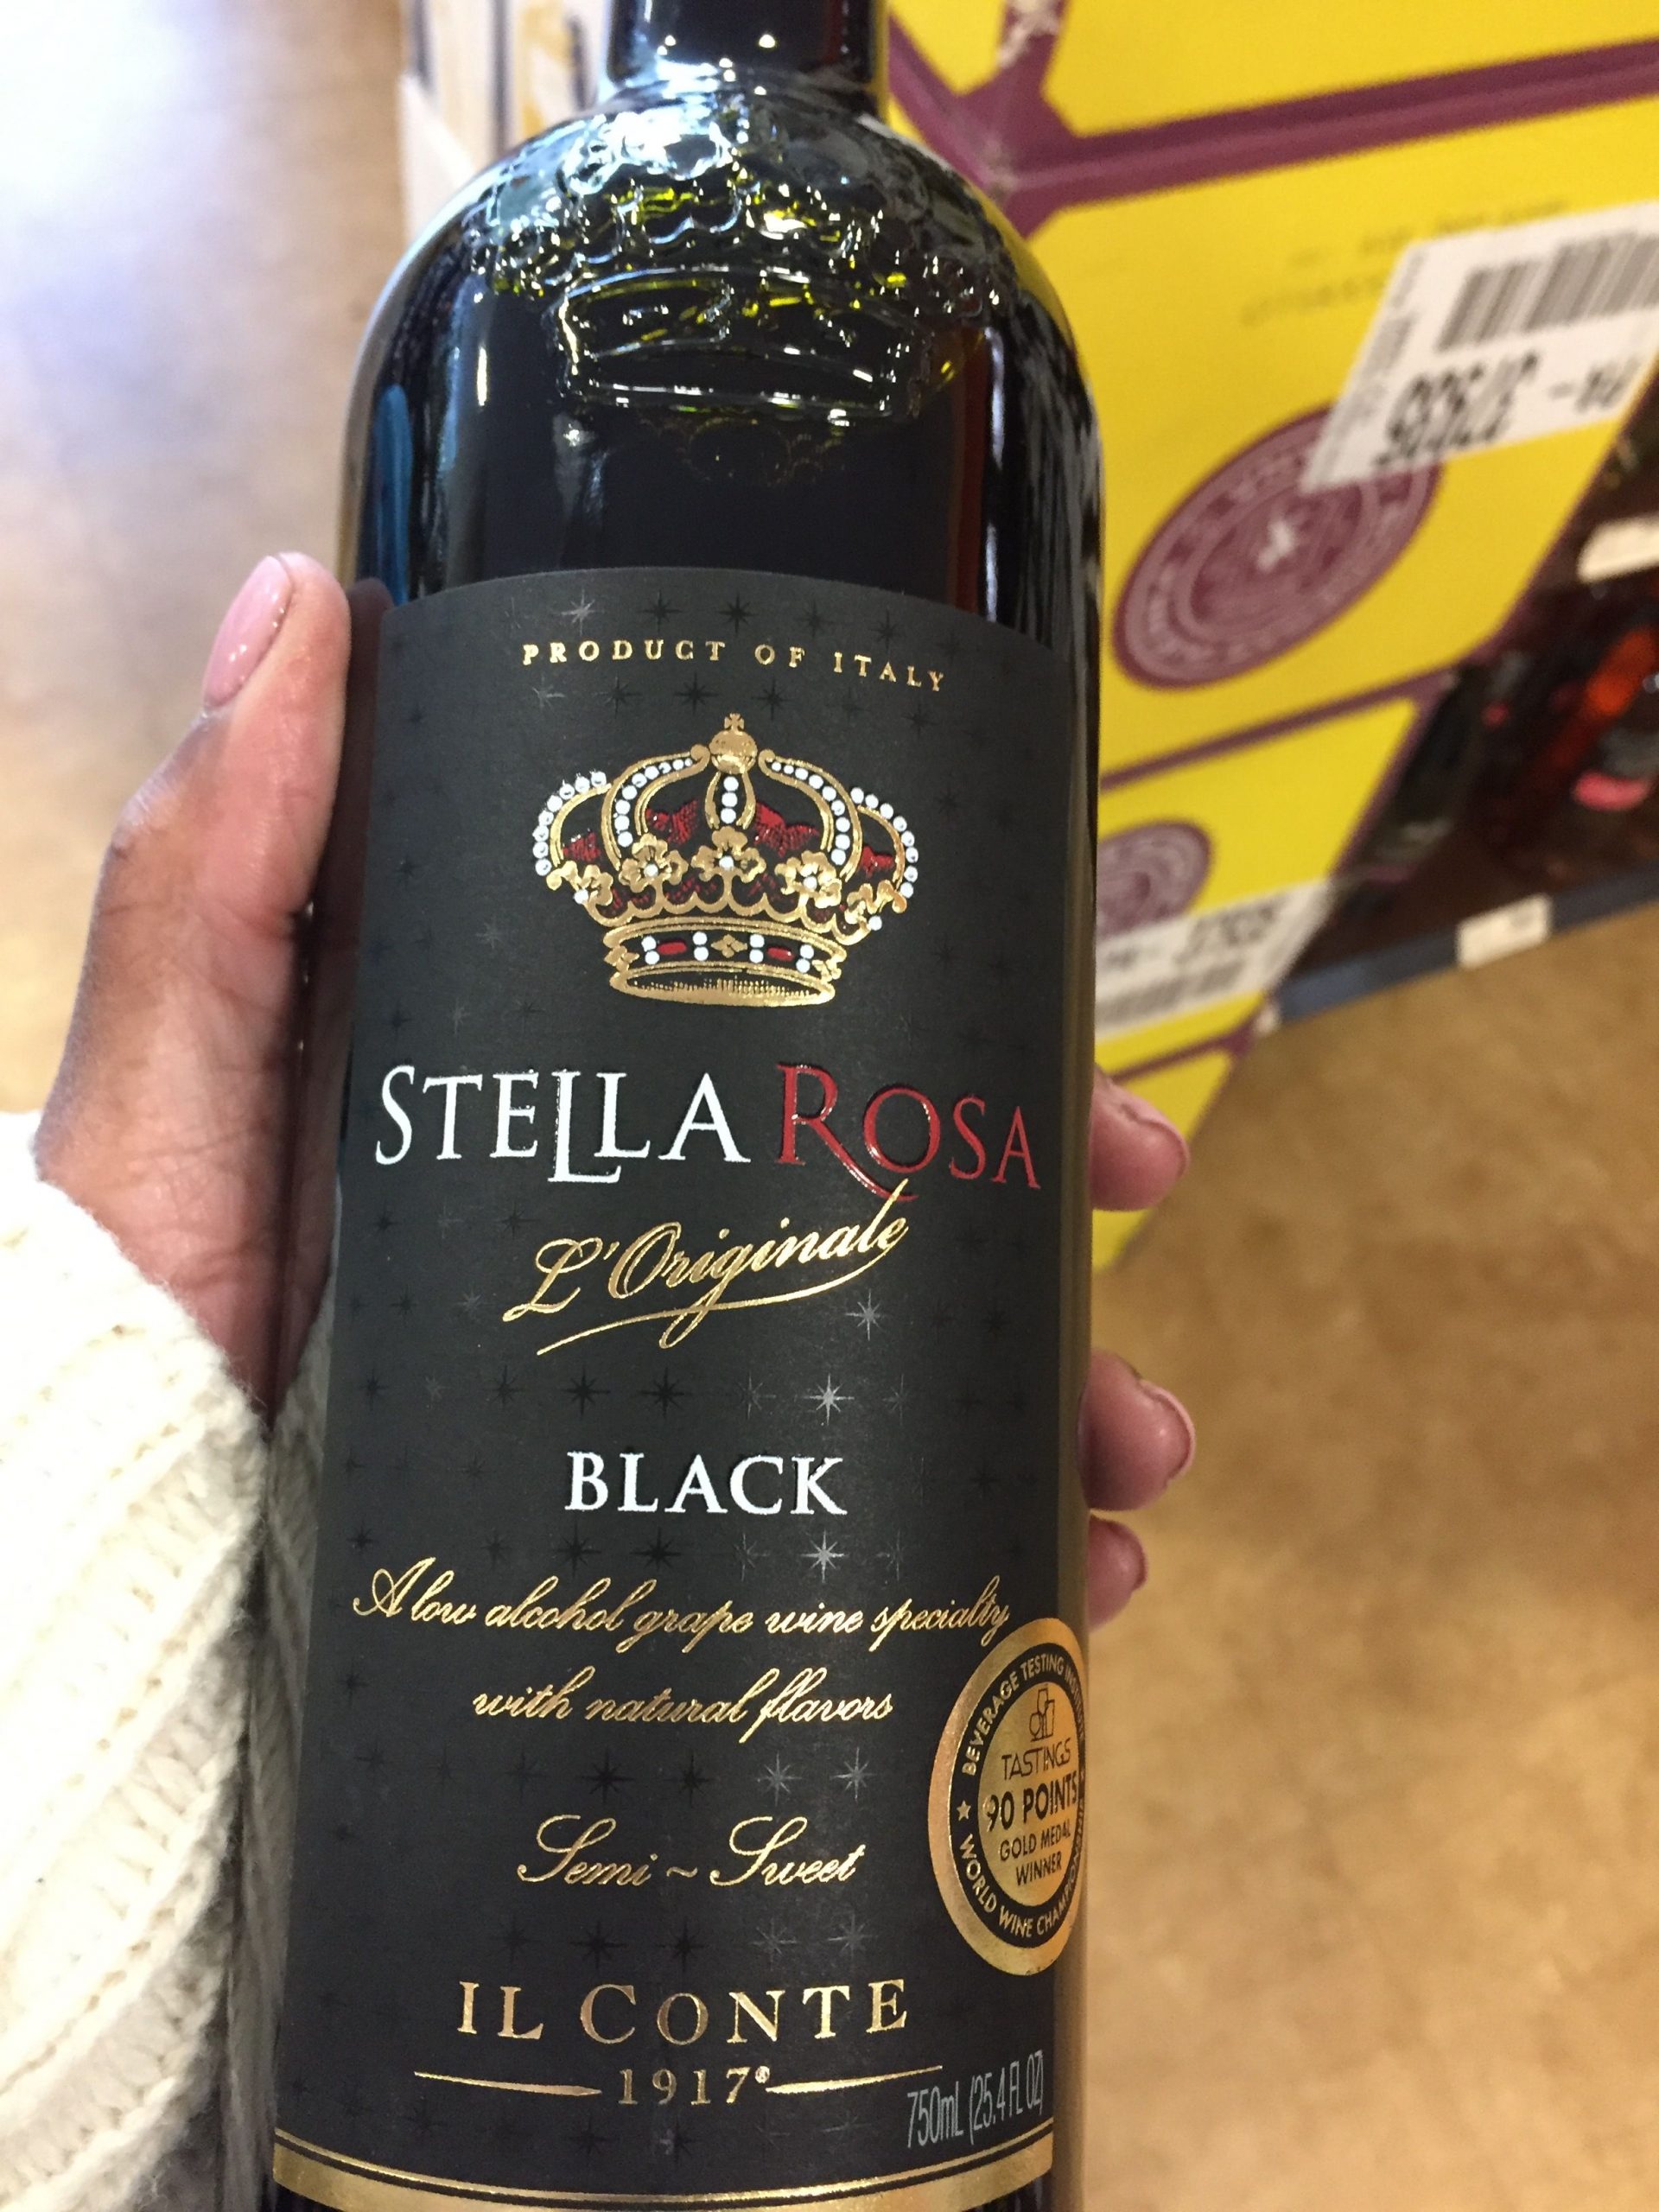 Stella Rosa Black Wine (my favorite)